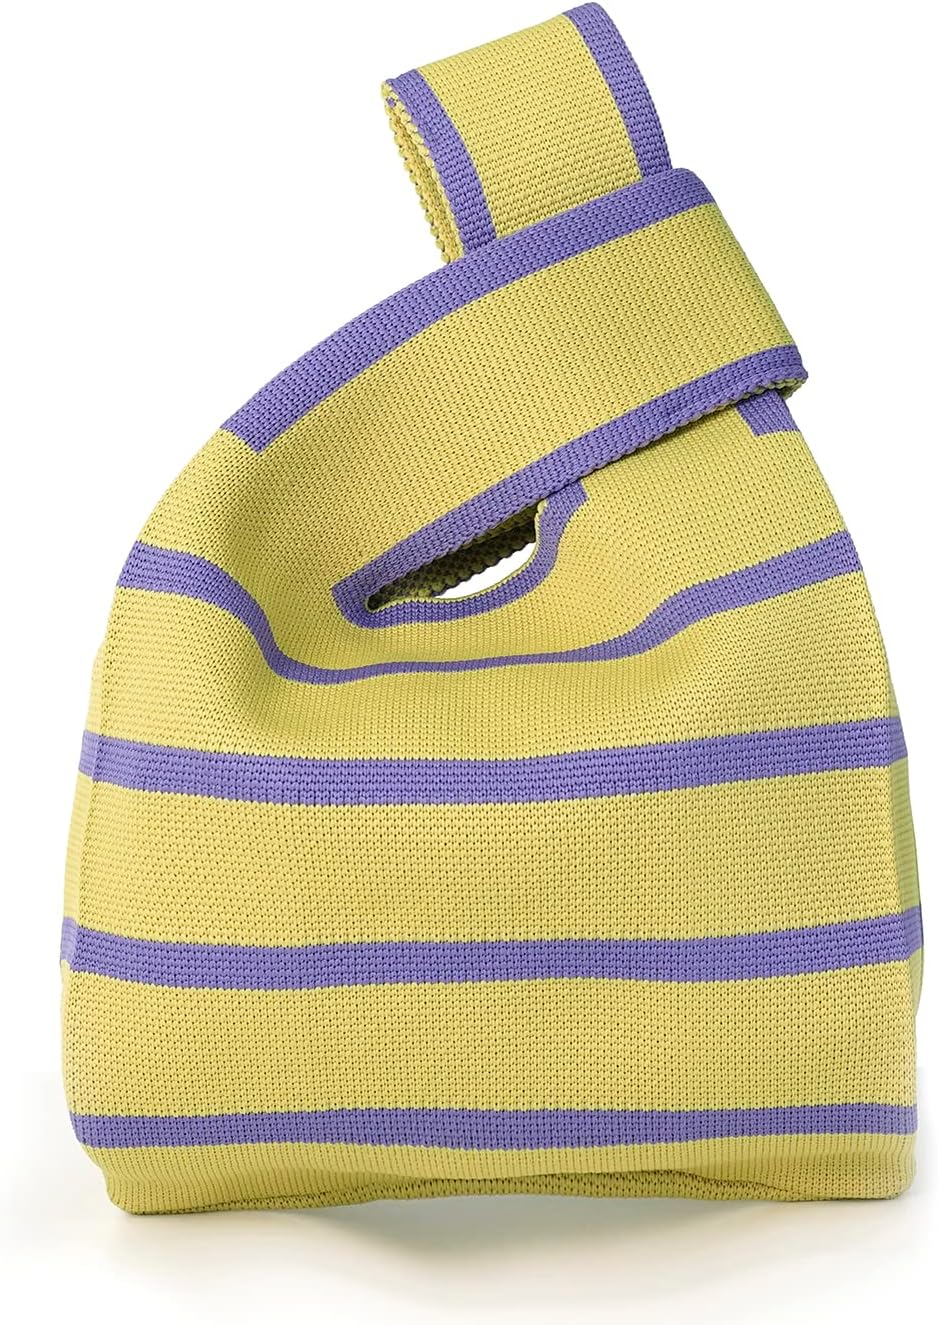 Colour Print Shoulder Bag for Women Fashion Tote Bag Small Hobo Handbag Purse Clucth Light Knit Top Handle Bag